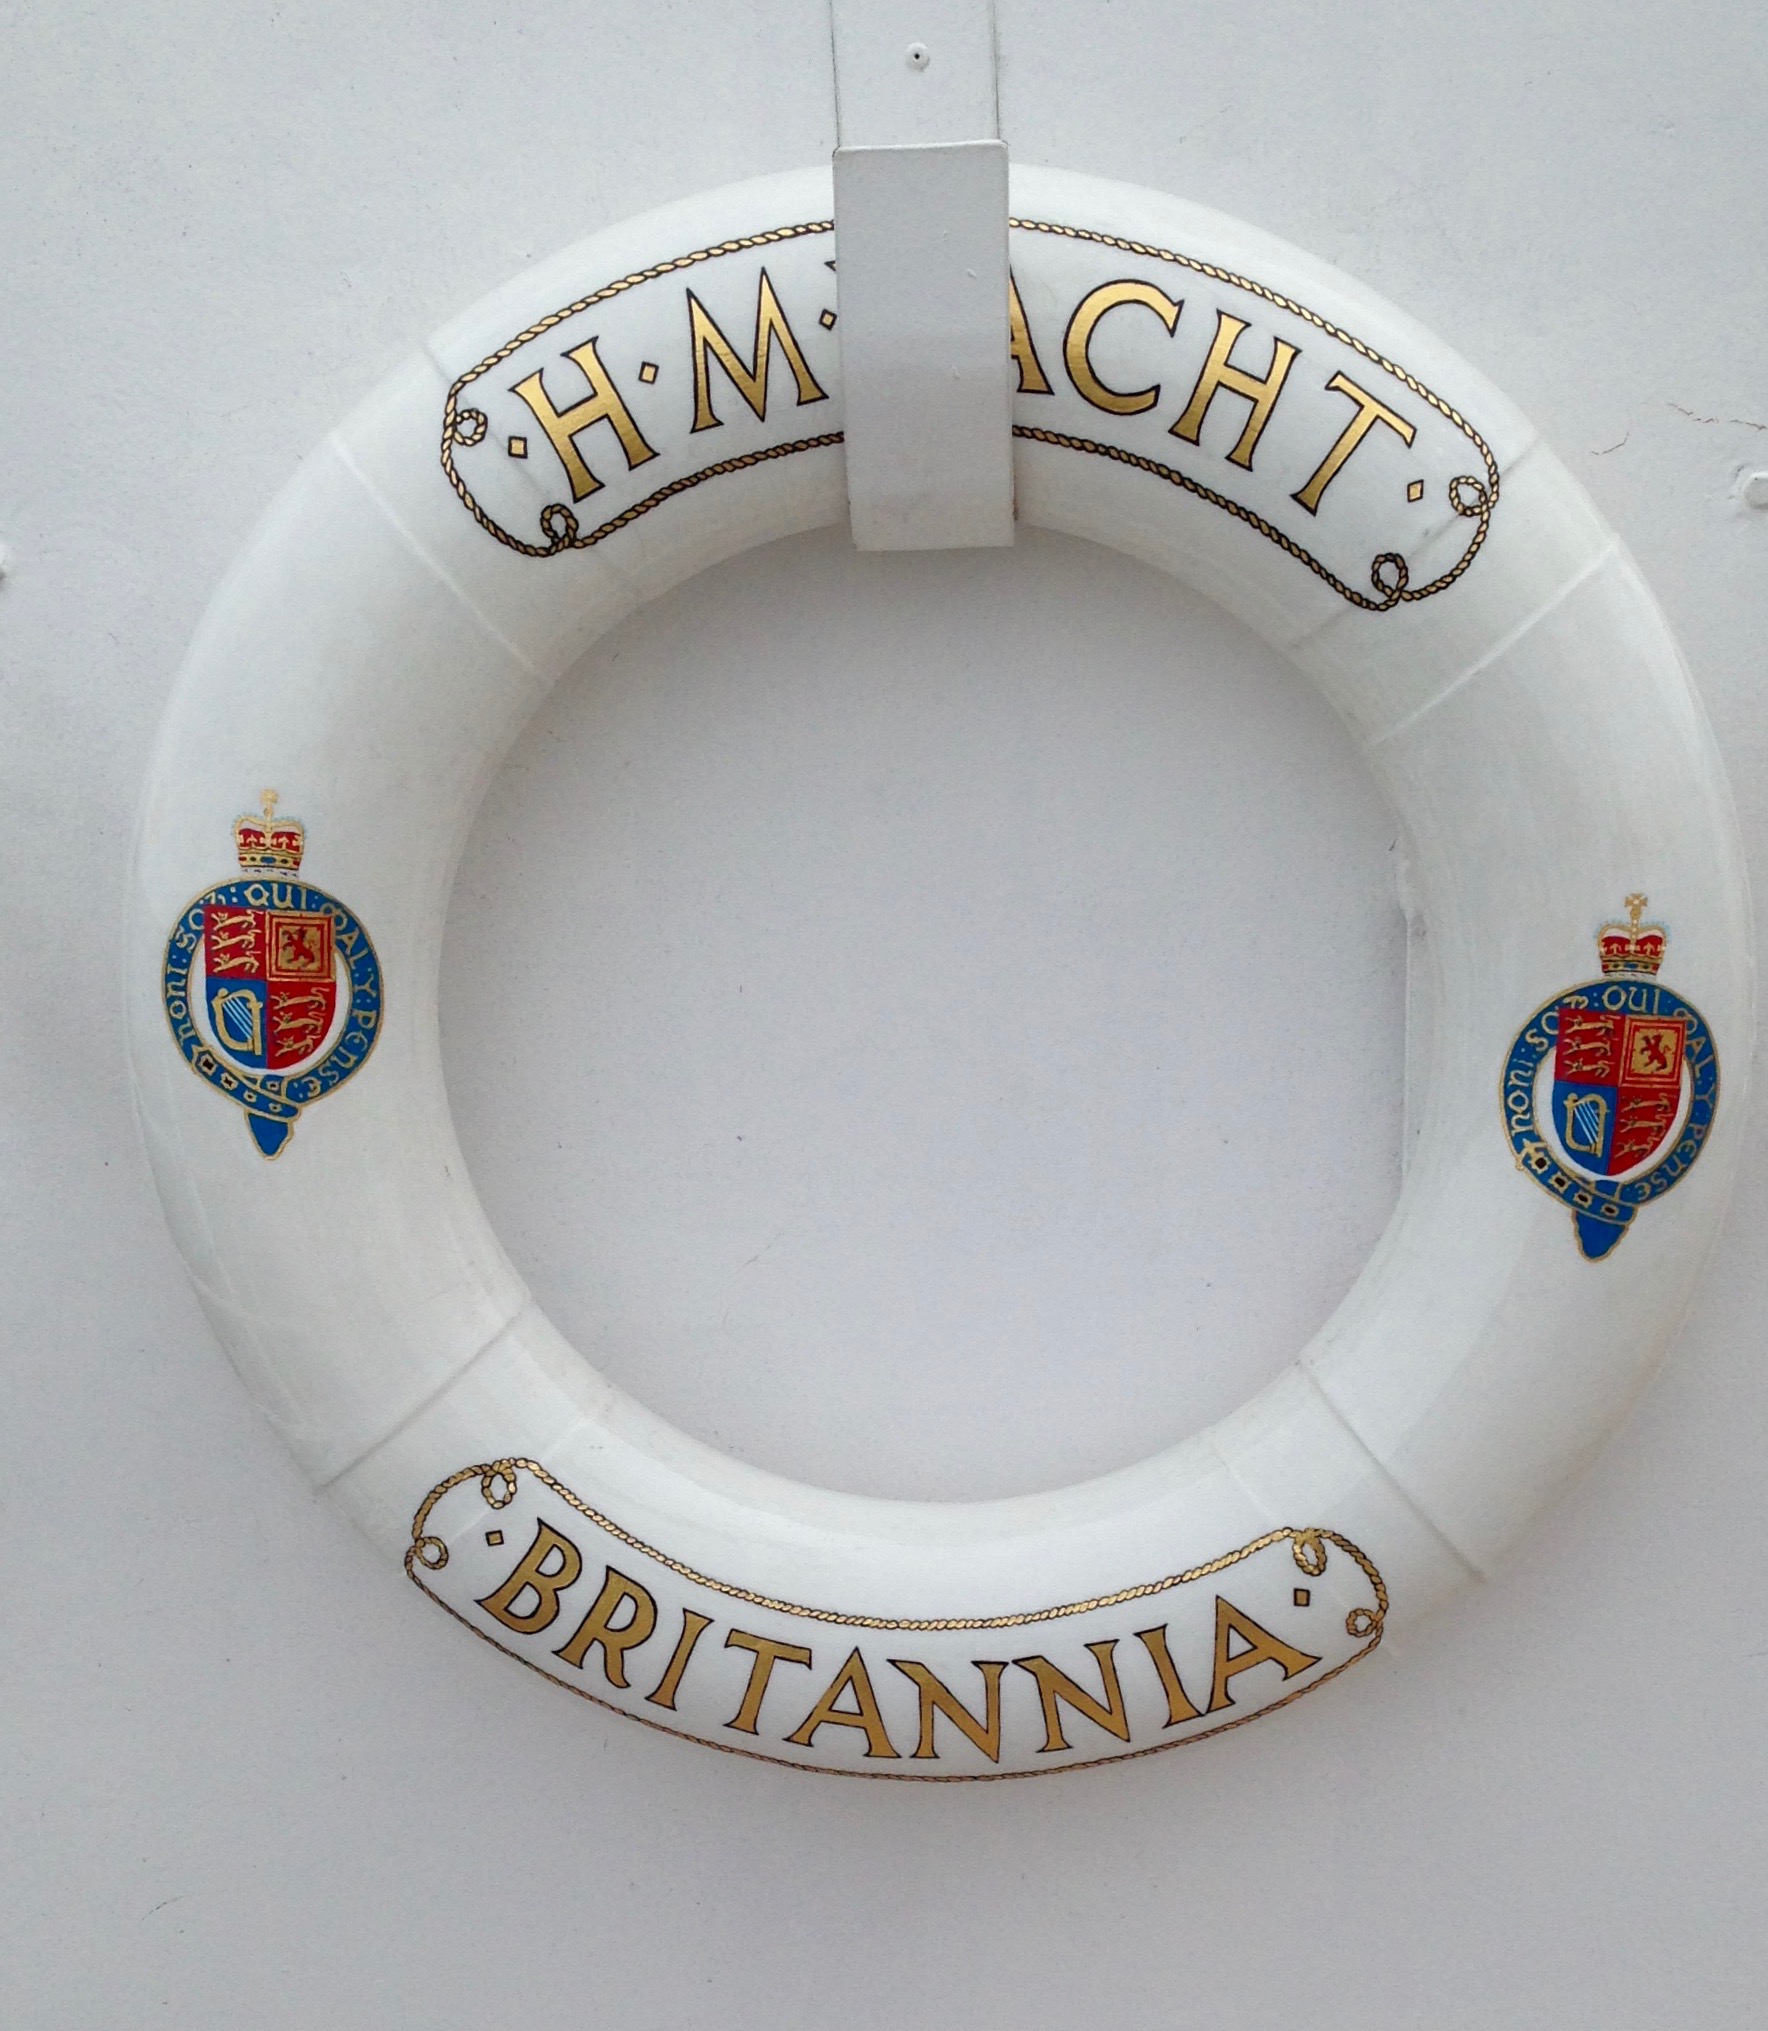 Visiting Royal Yacht Britannia